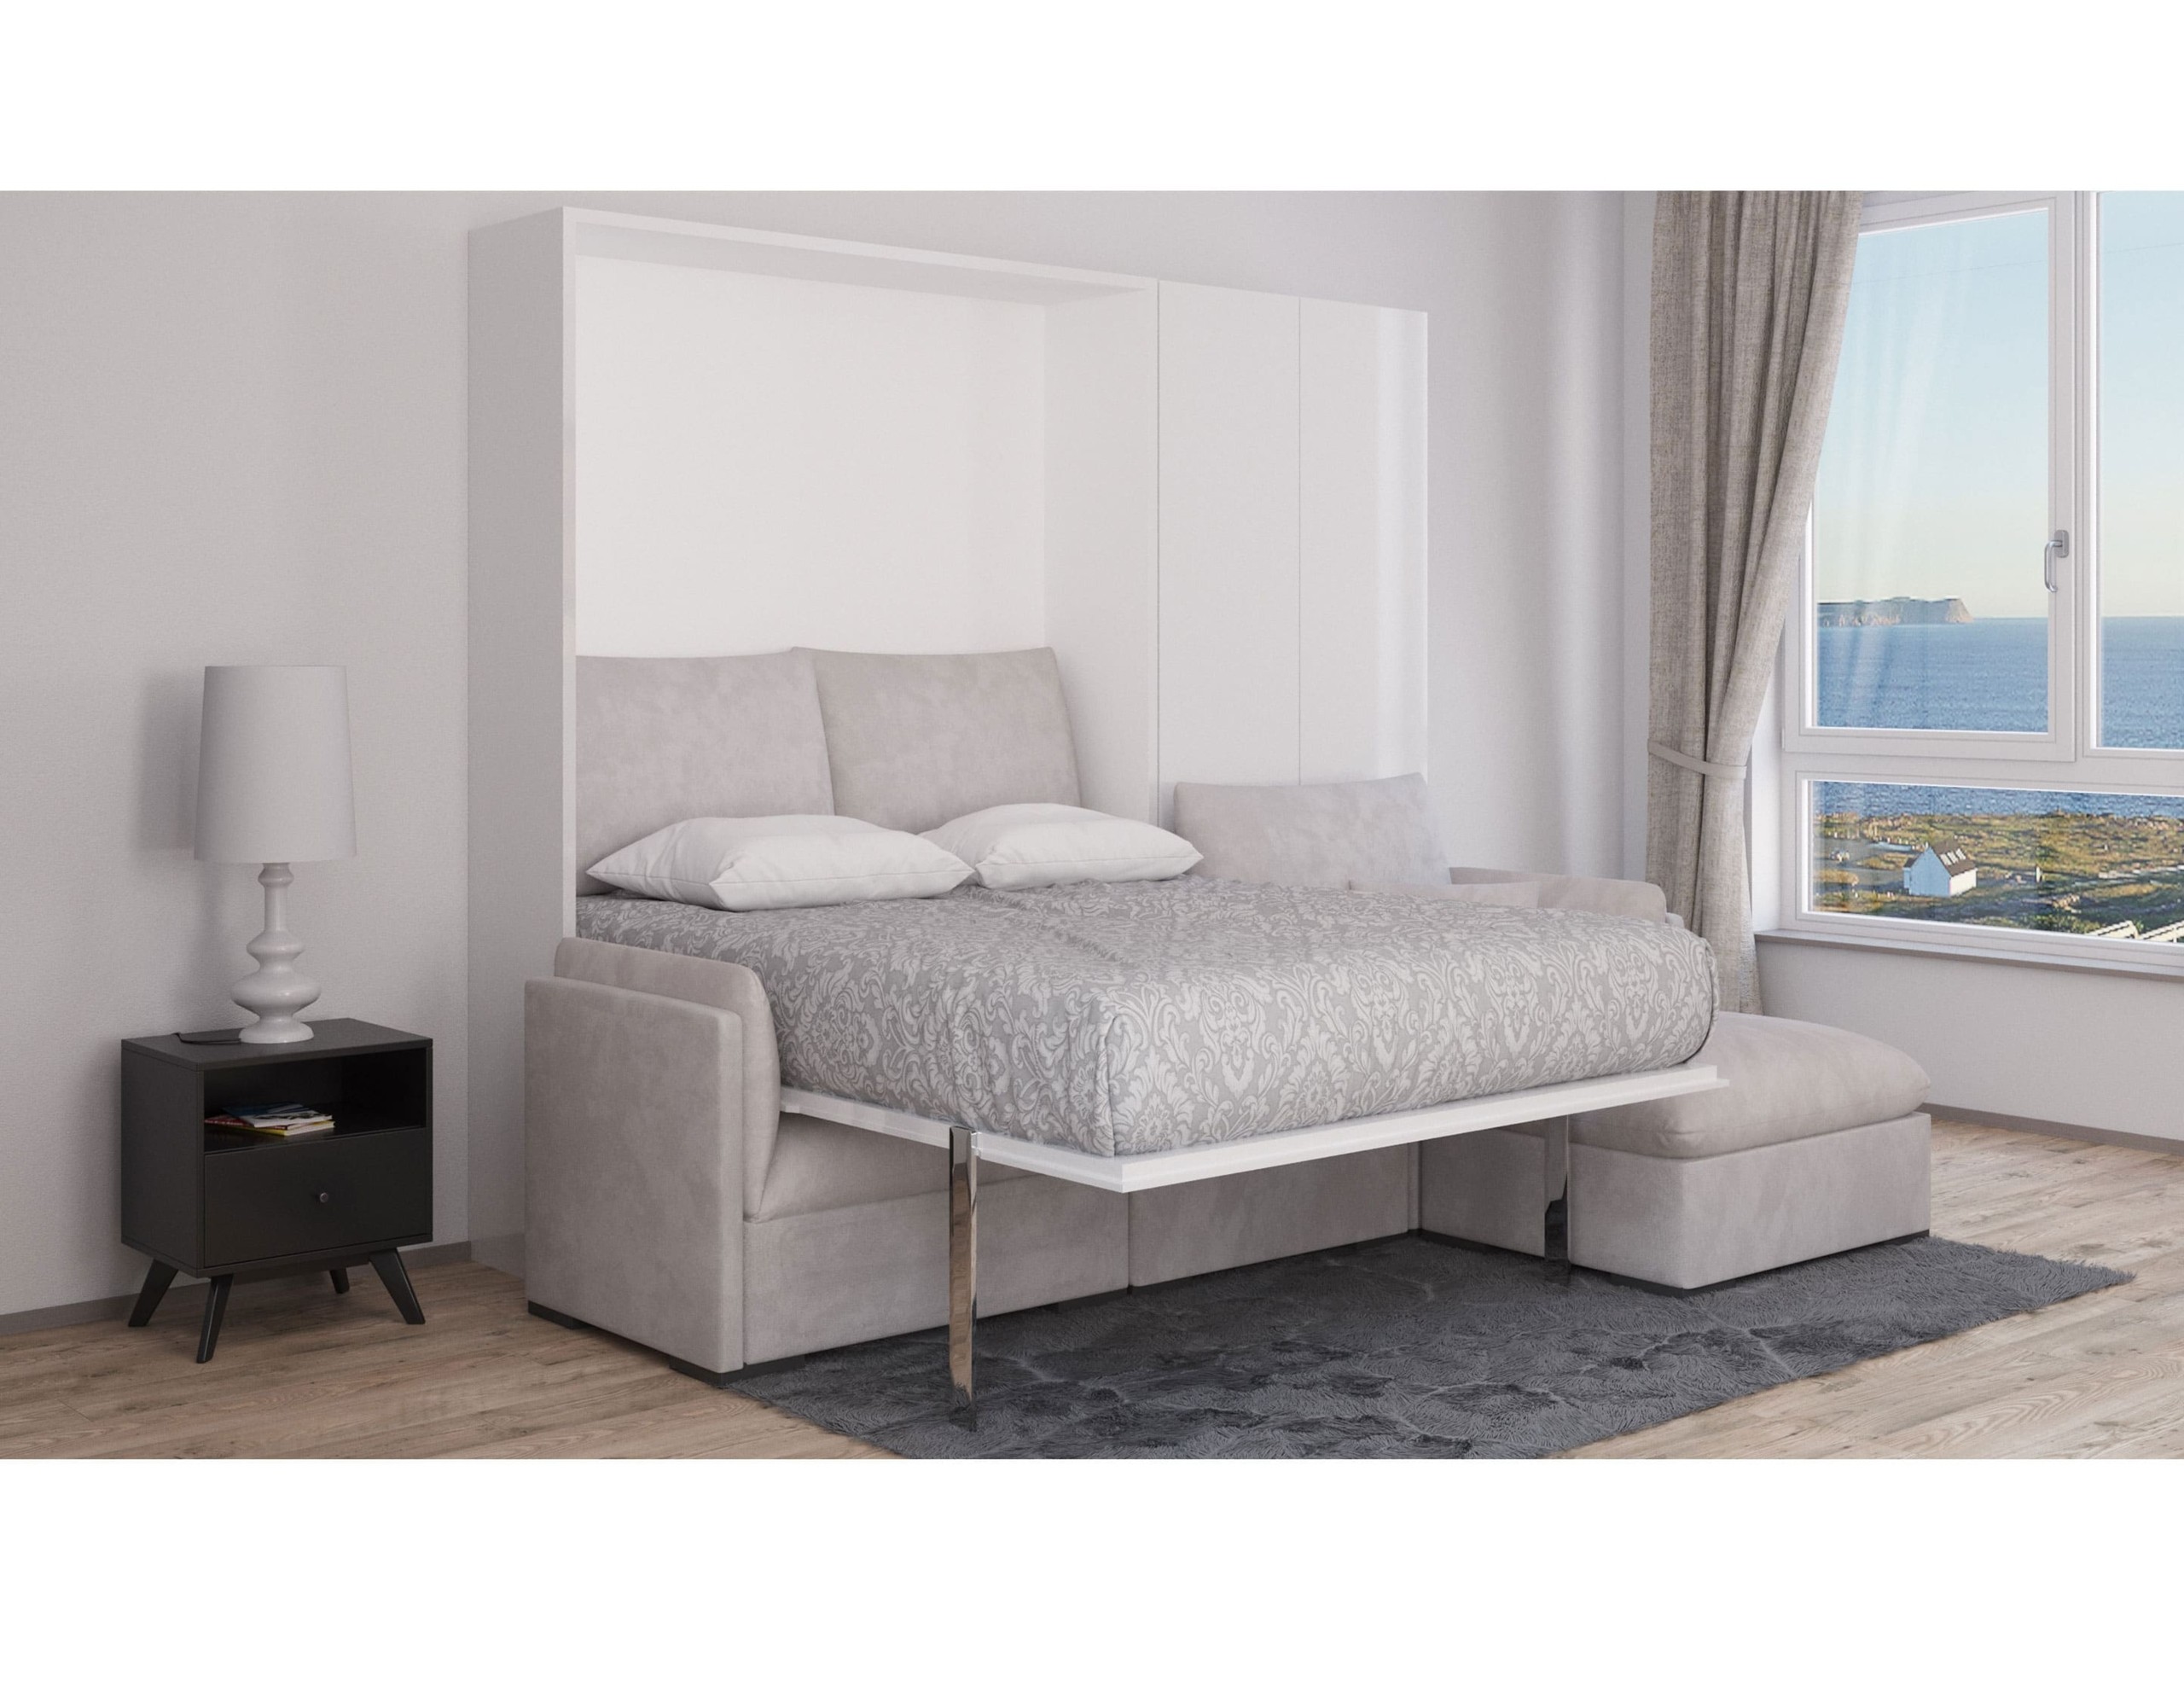 Murphysofa adagio queen luxury sectional sofa wall bed